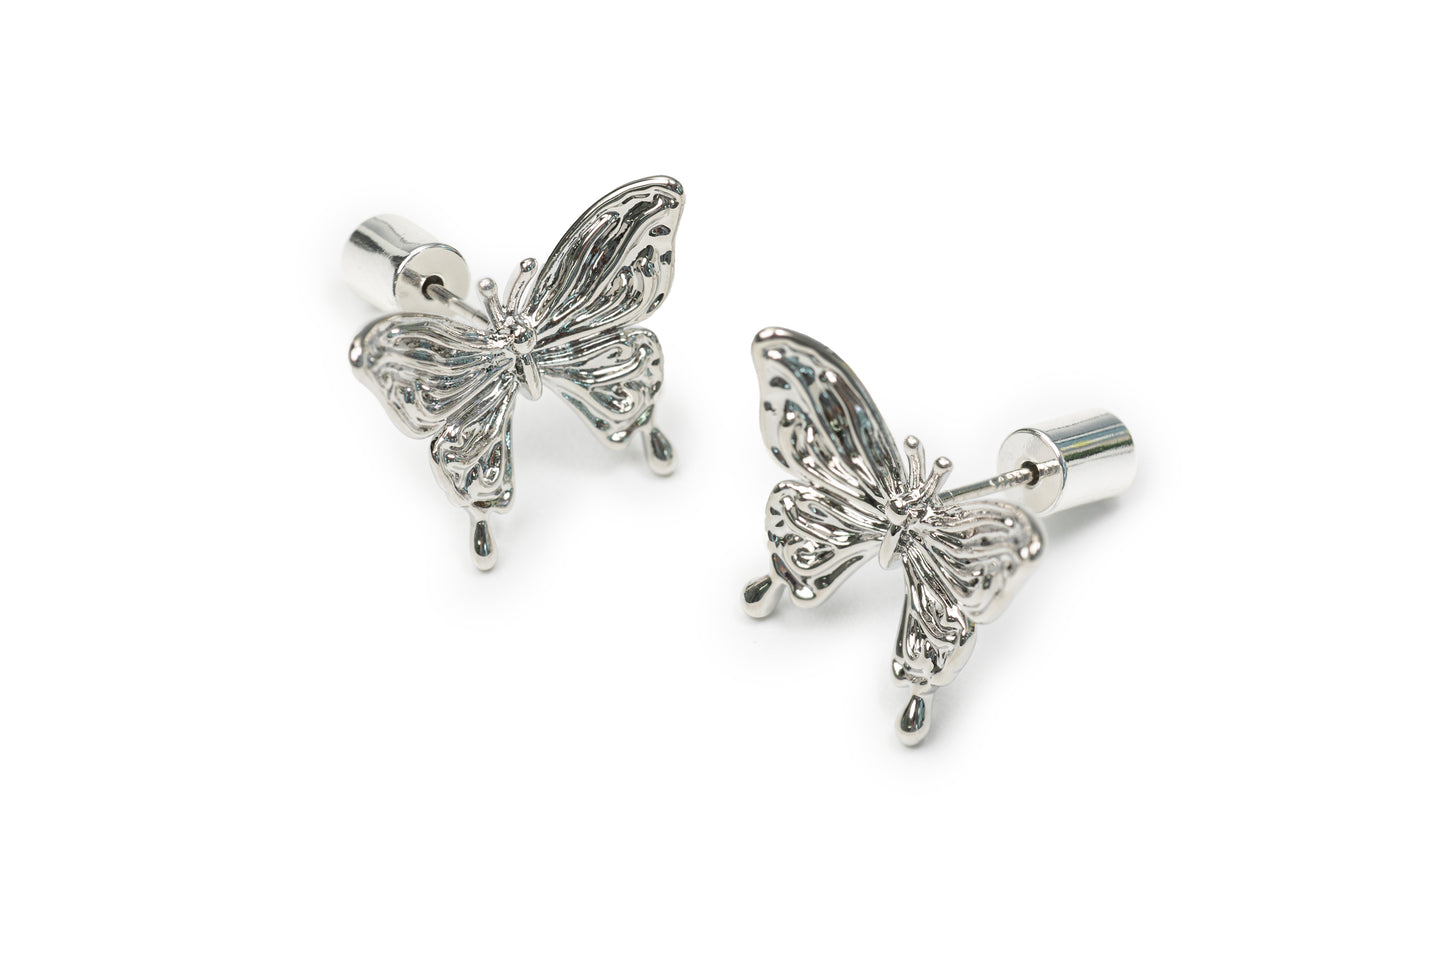 Planderful Silver Butterfly Studs - Silver Studs for Women